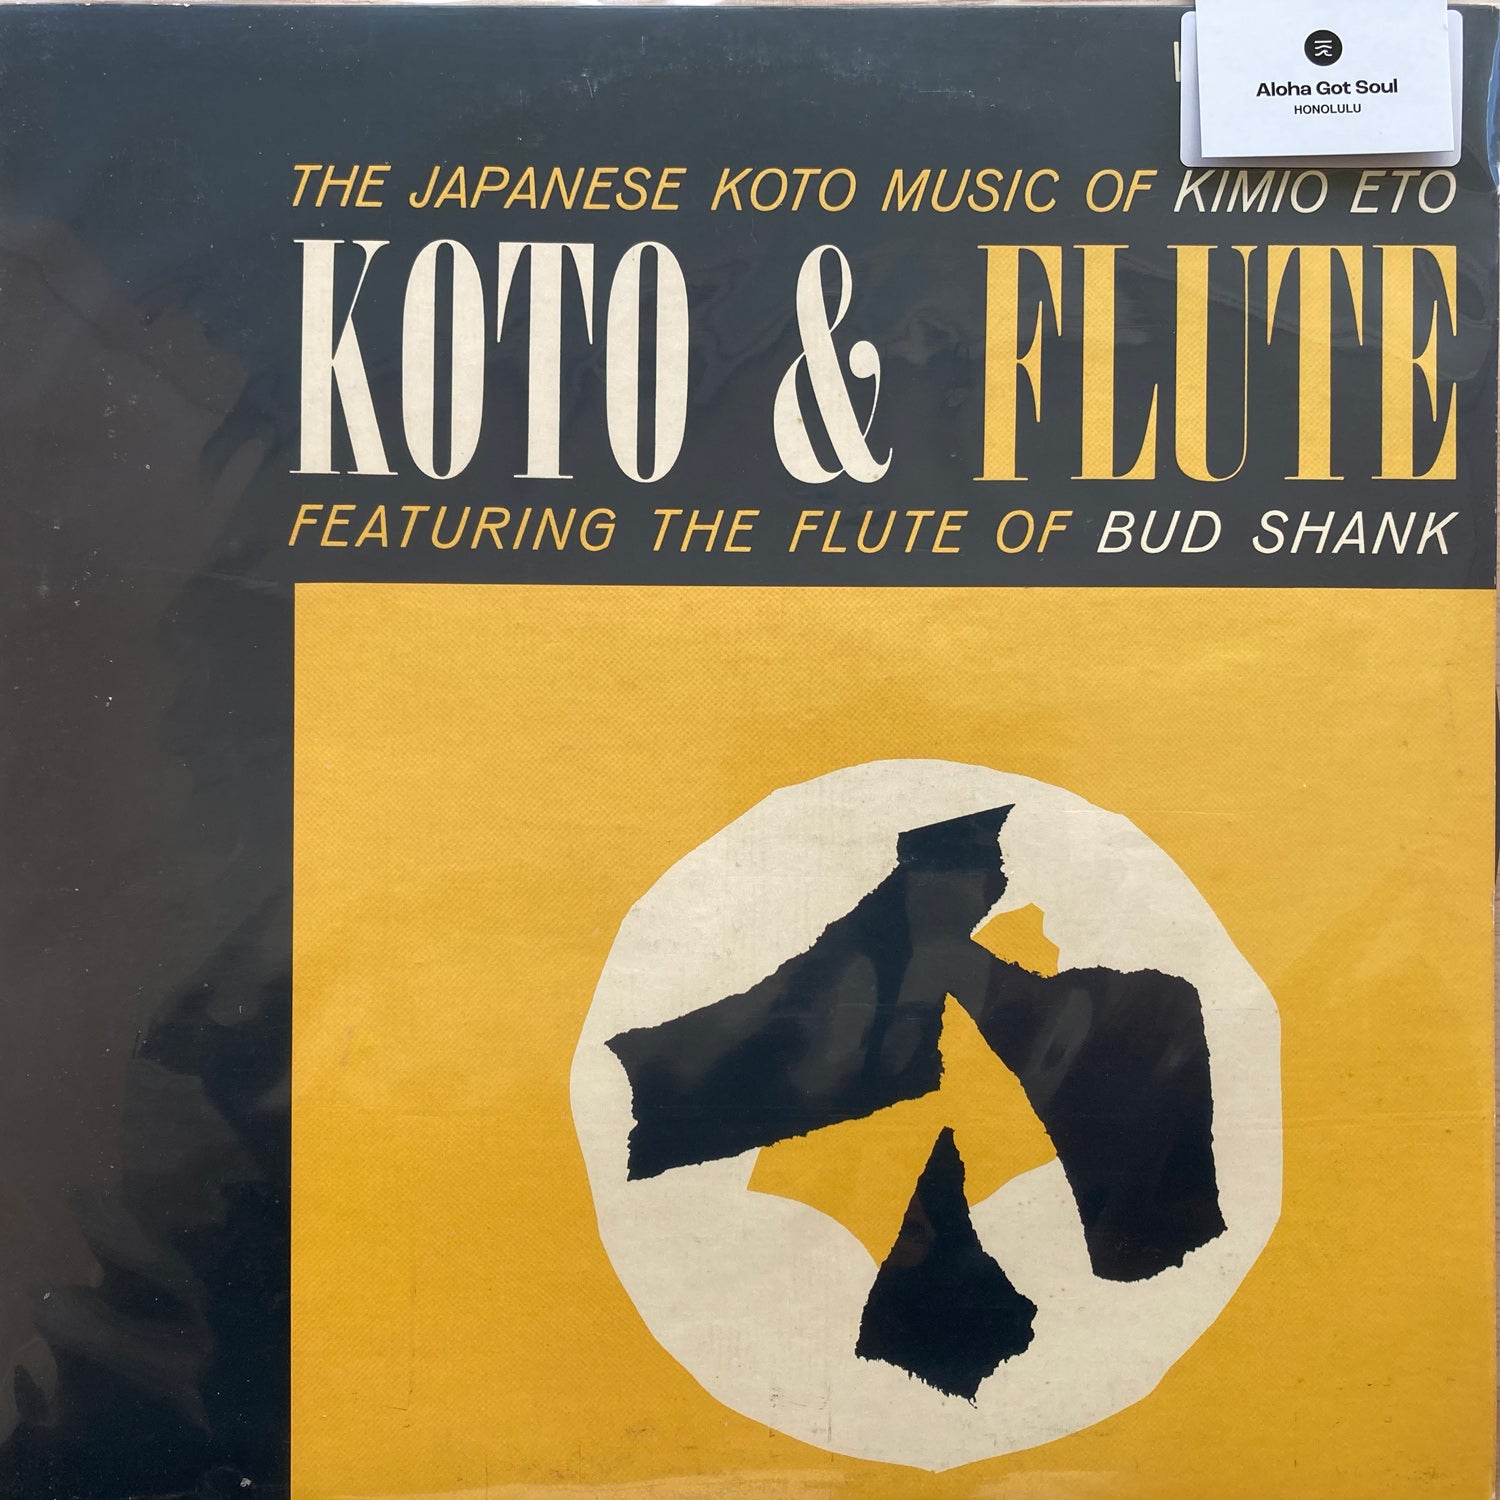 Kimio Eto - Koto & Flute featuring Bud Shank